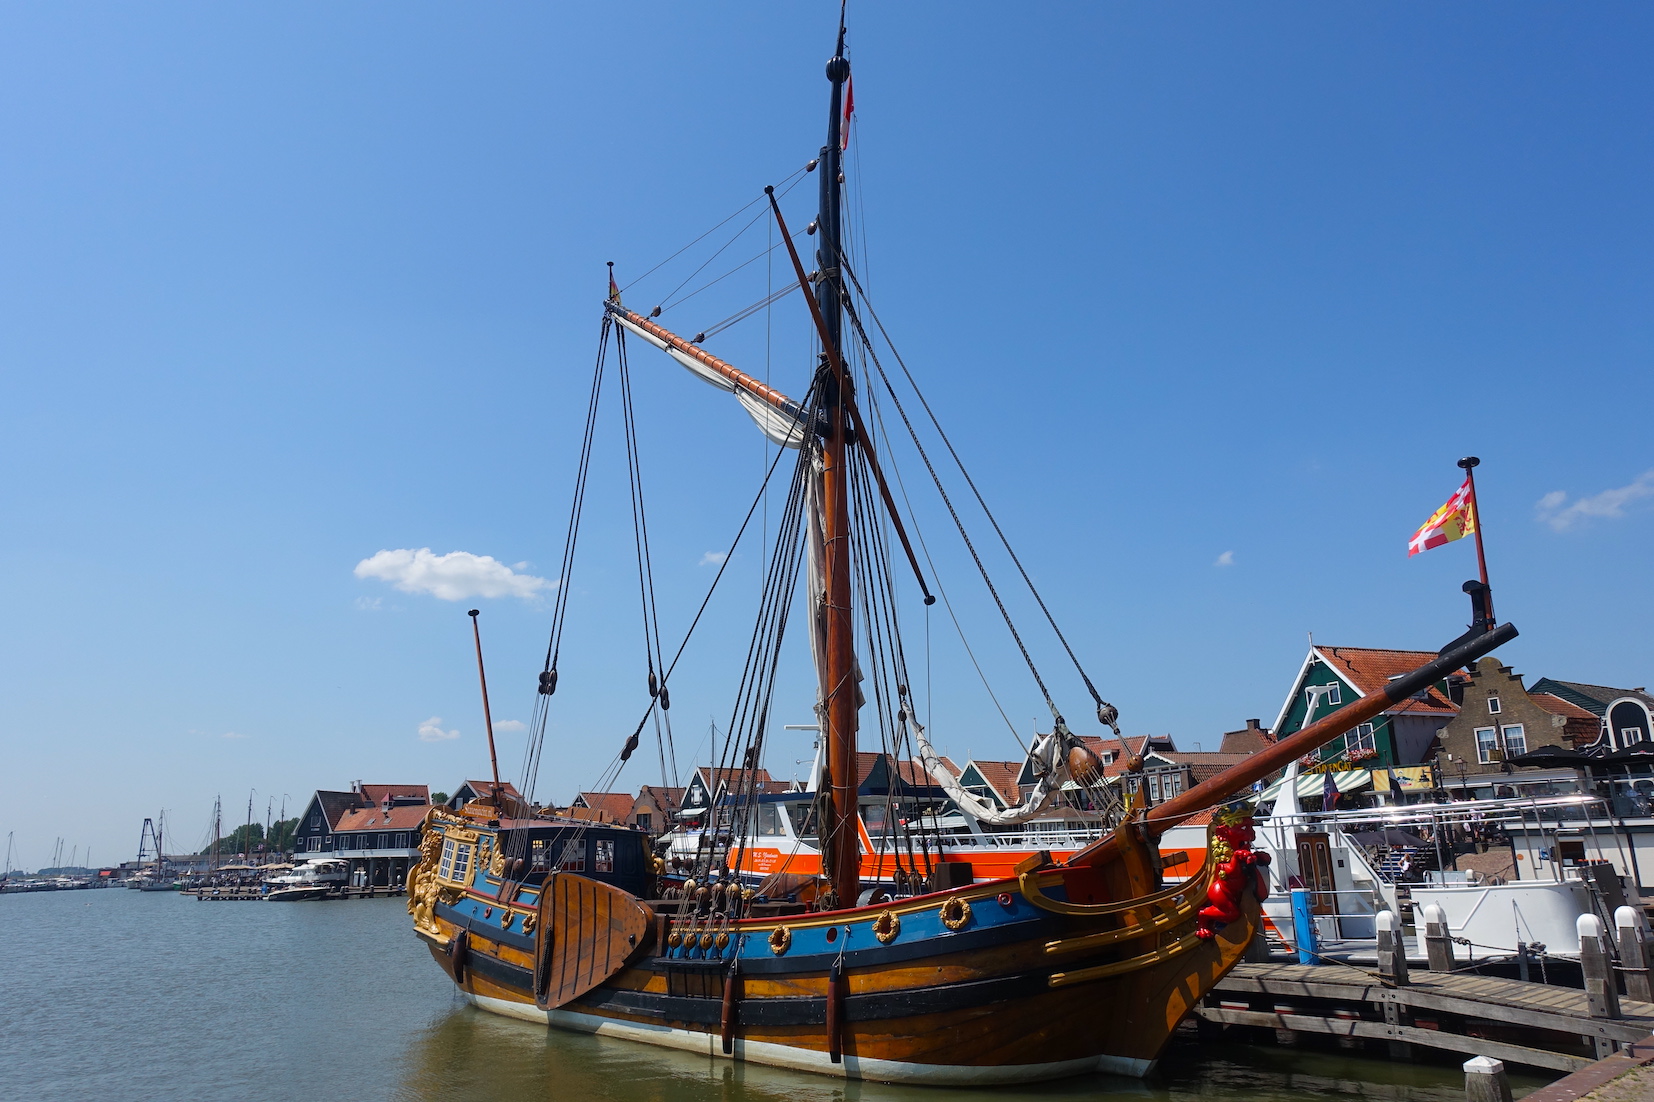 A view of the Halve Maen ship replica in Volendam